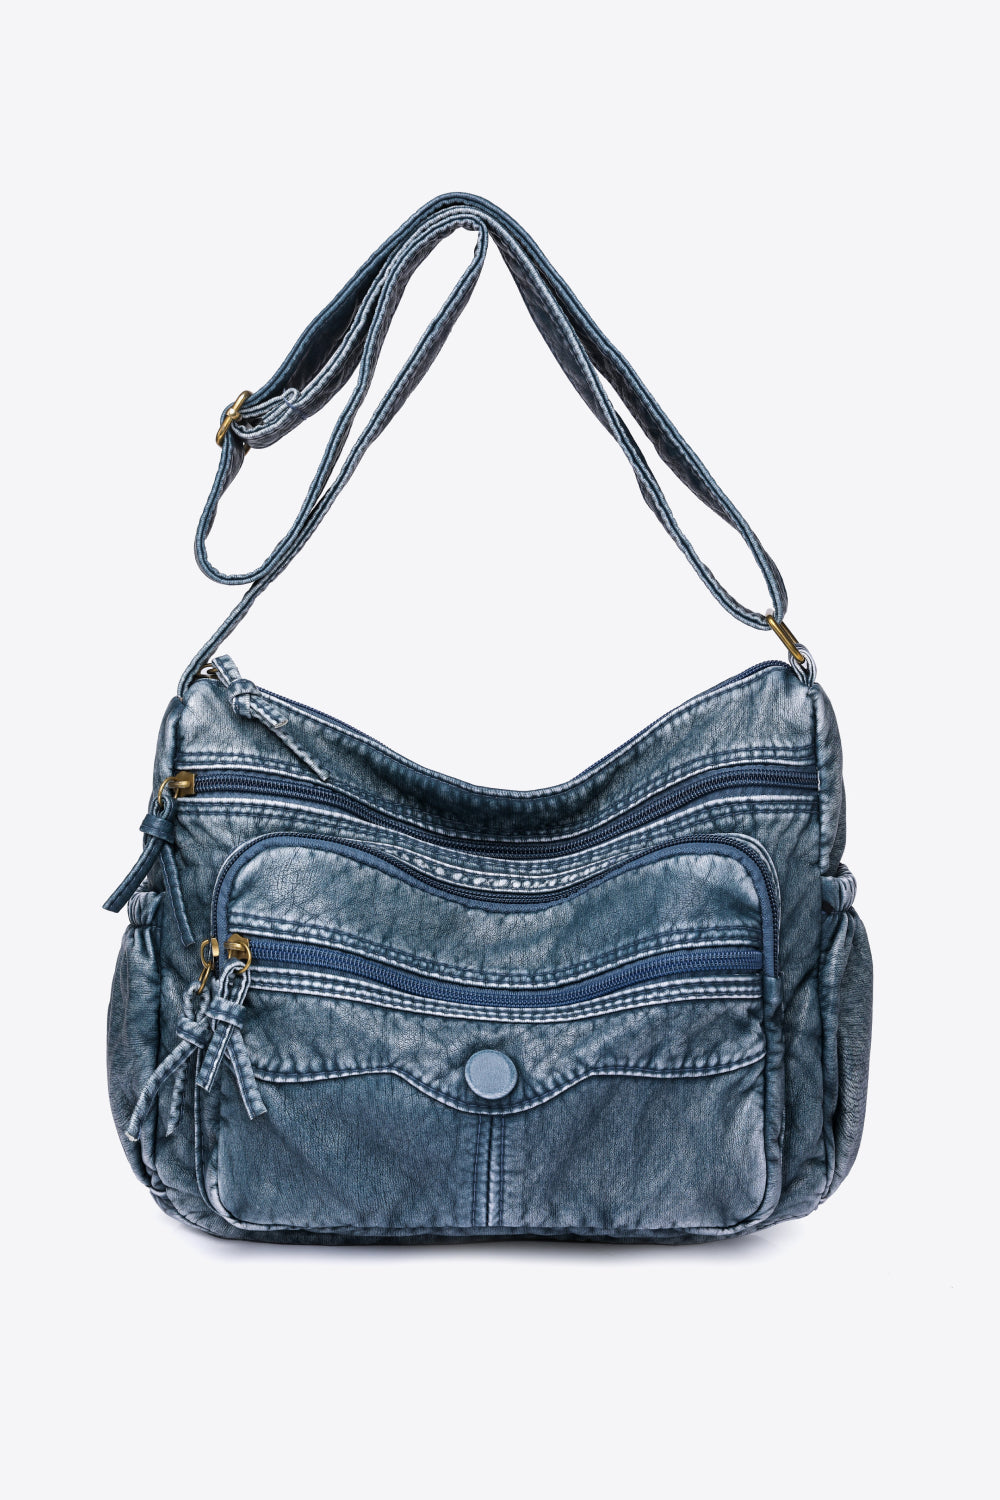 LOV by Westside Brown Leather Tote Bag with Sling Bag